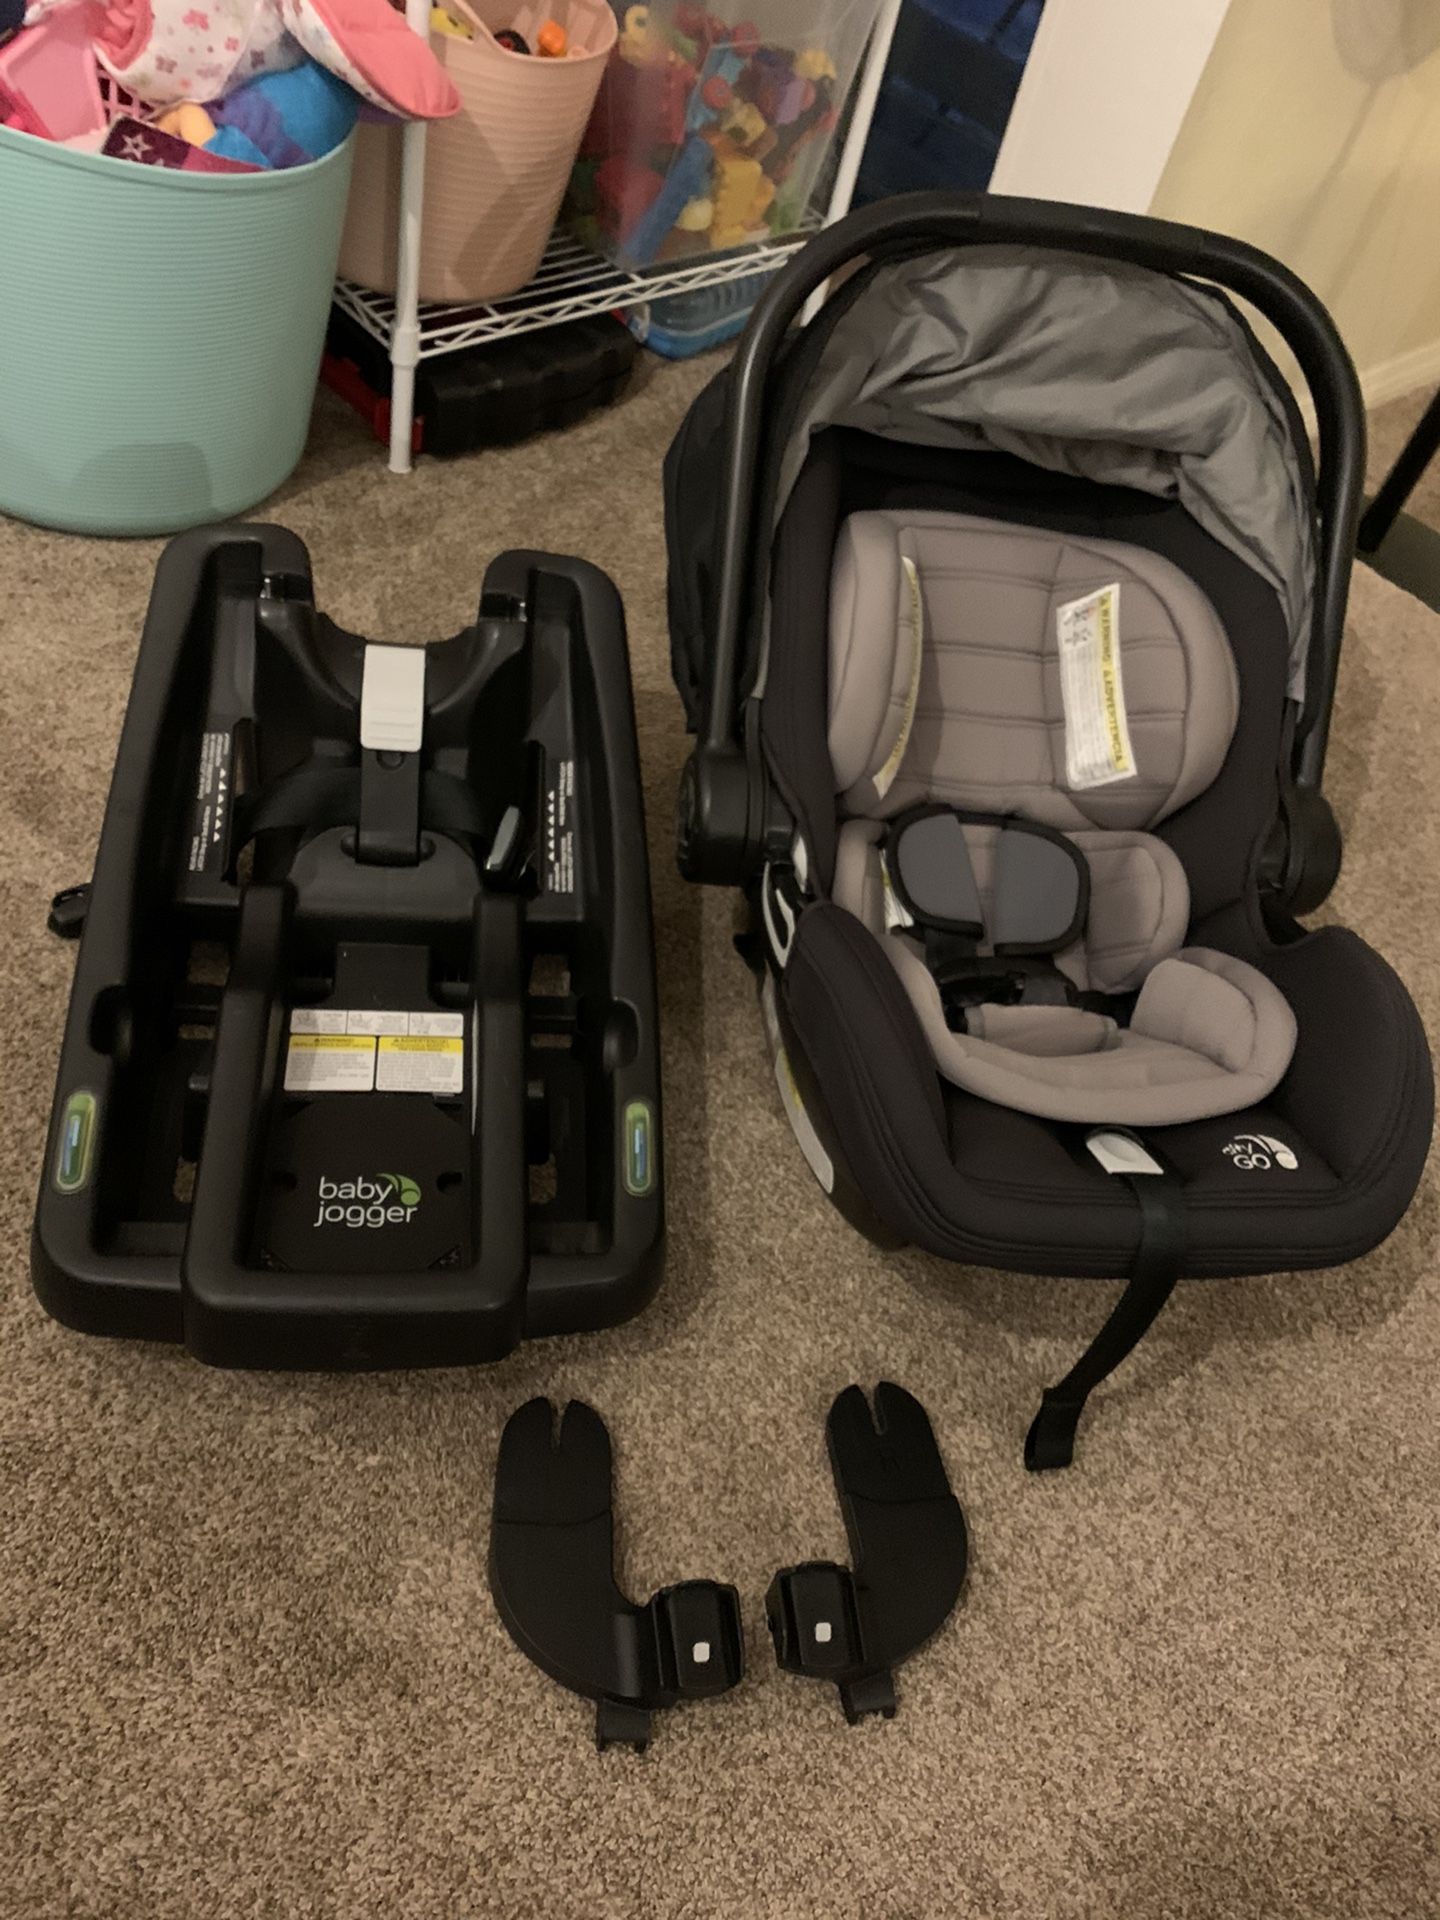 Baby jogger city go infant car seat